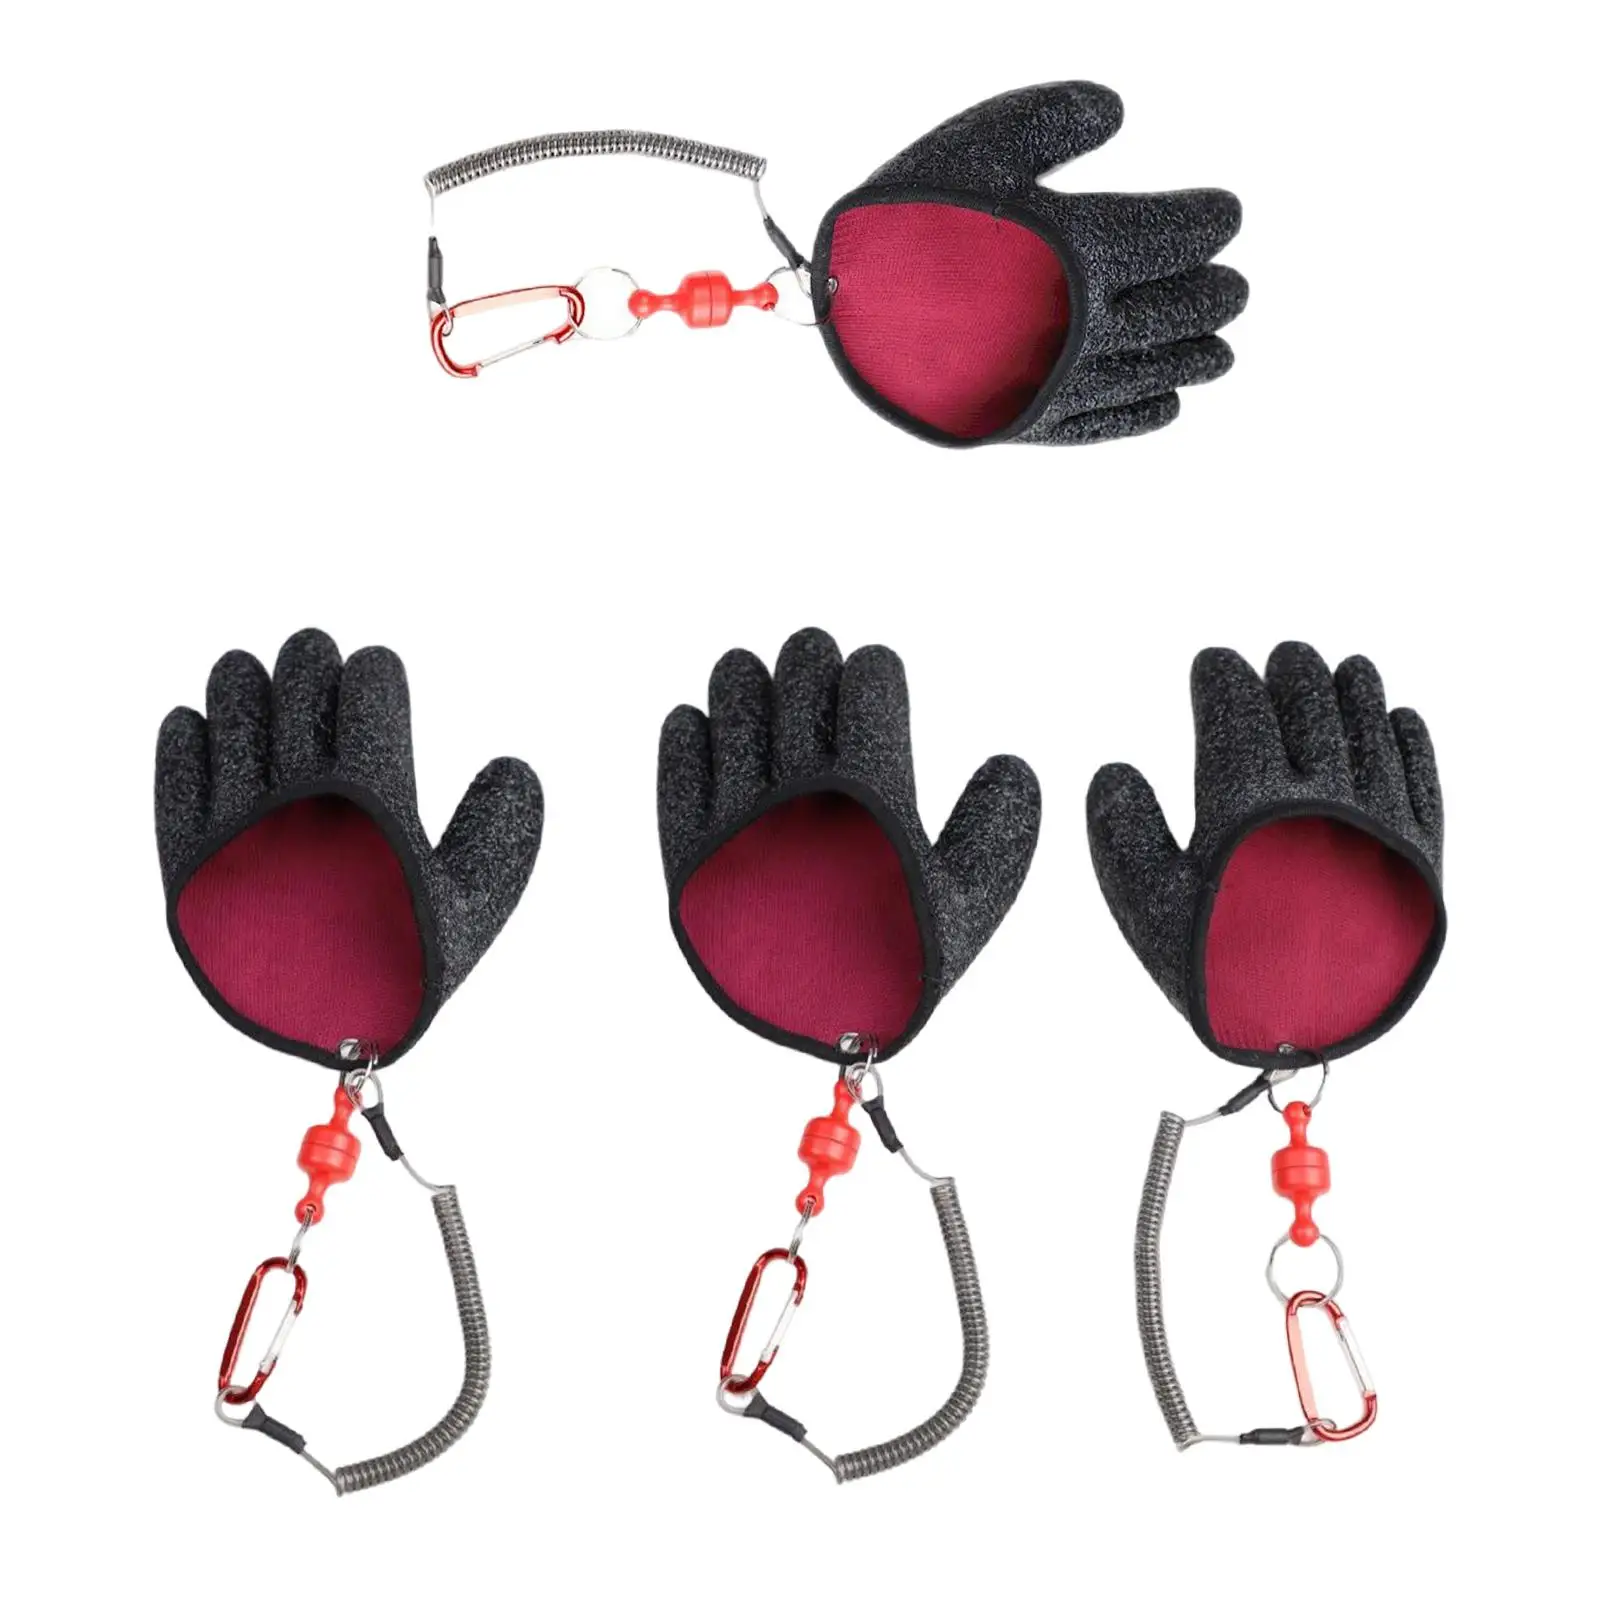 Fishing Gloves Nonslip Puncture Proof Water Resistant Hunting Gloves Fish Glove Cut Resistant for Handling Women Men Fisherman